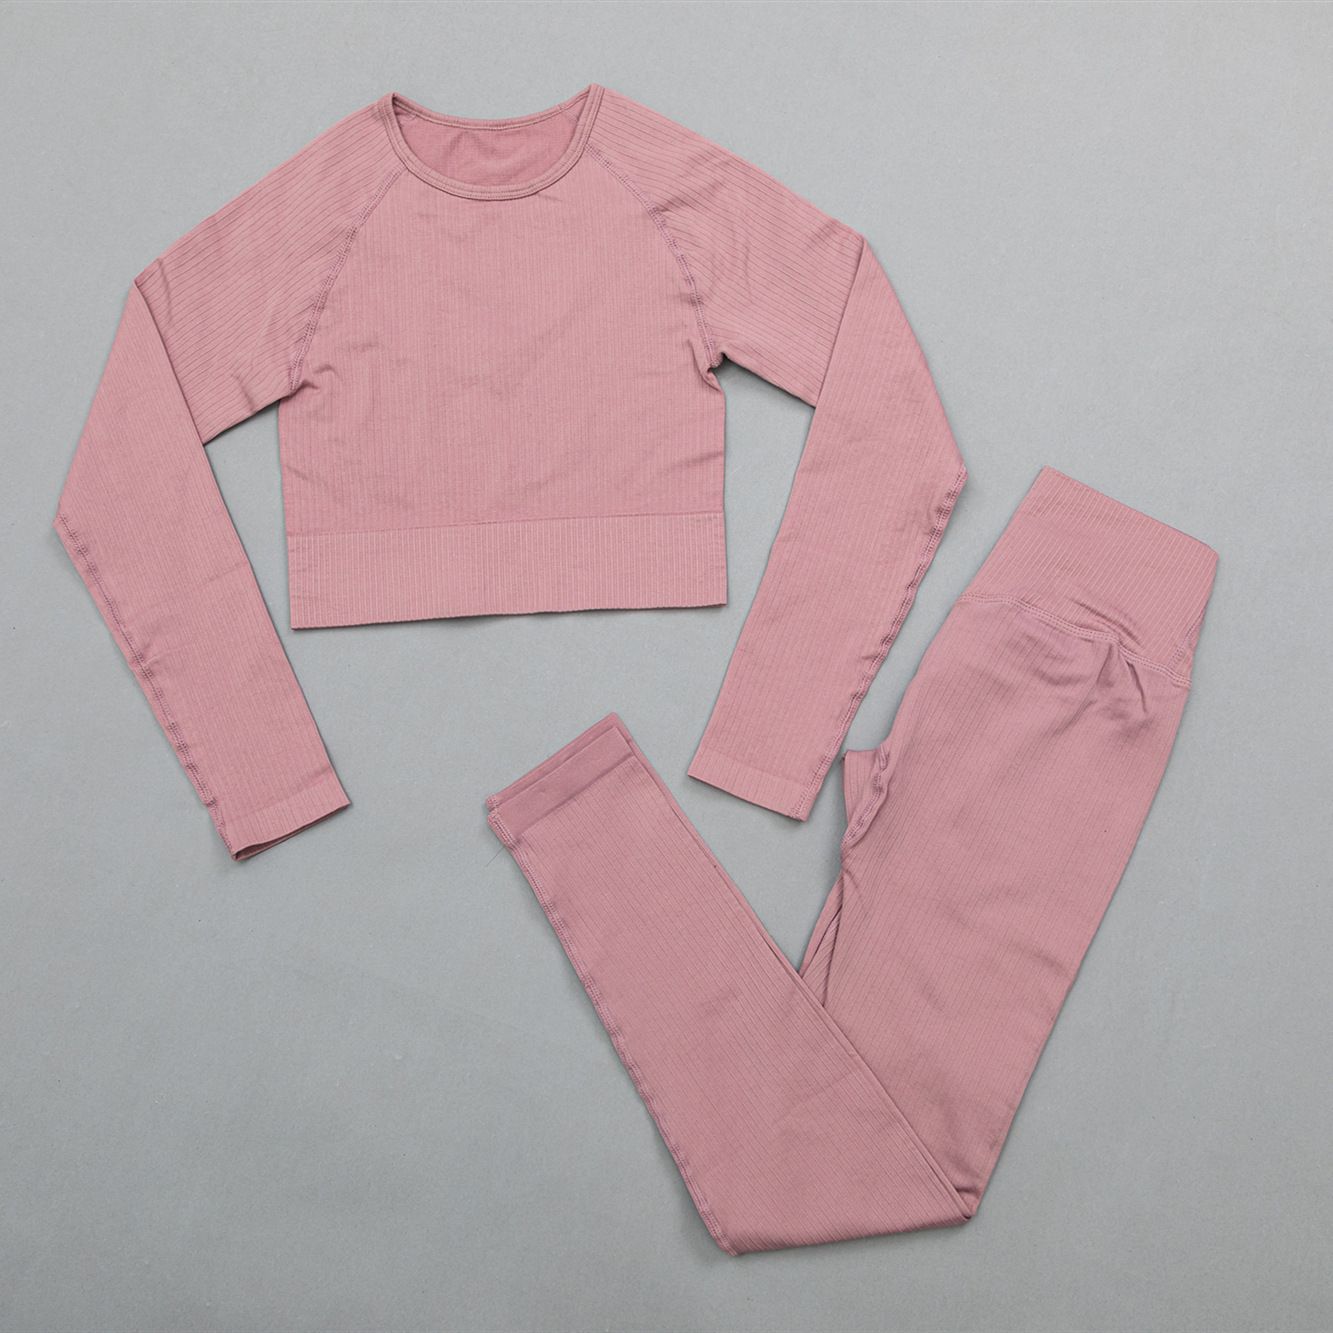 Shirtpants Pinkred